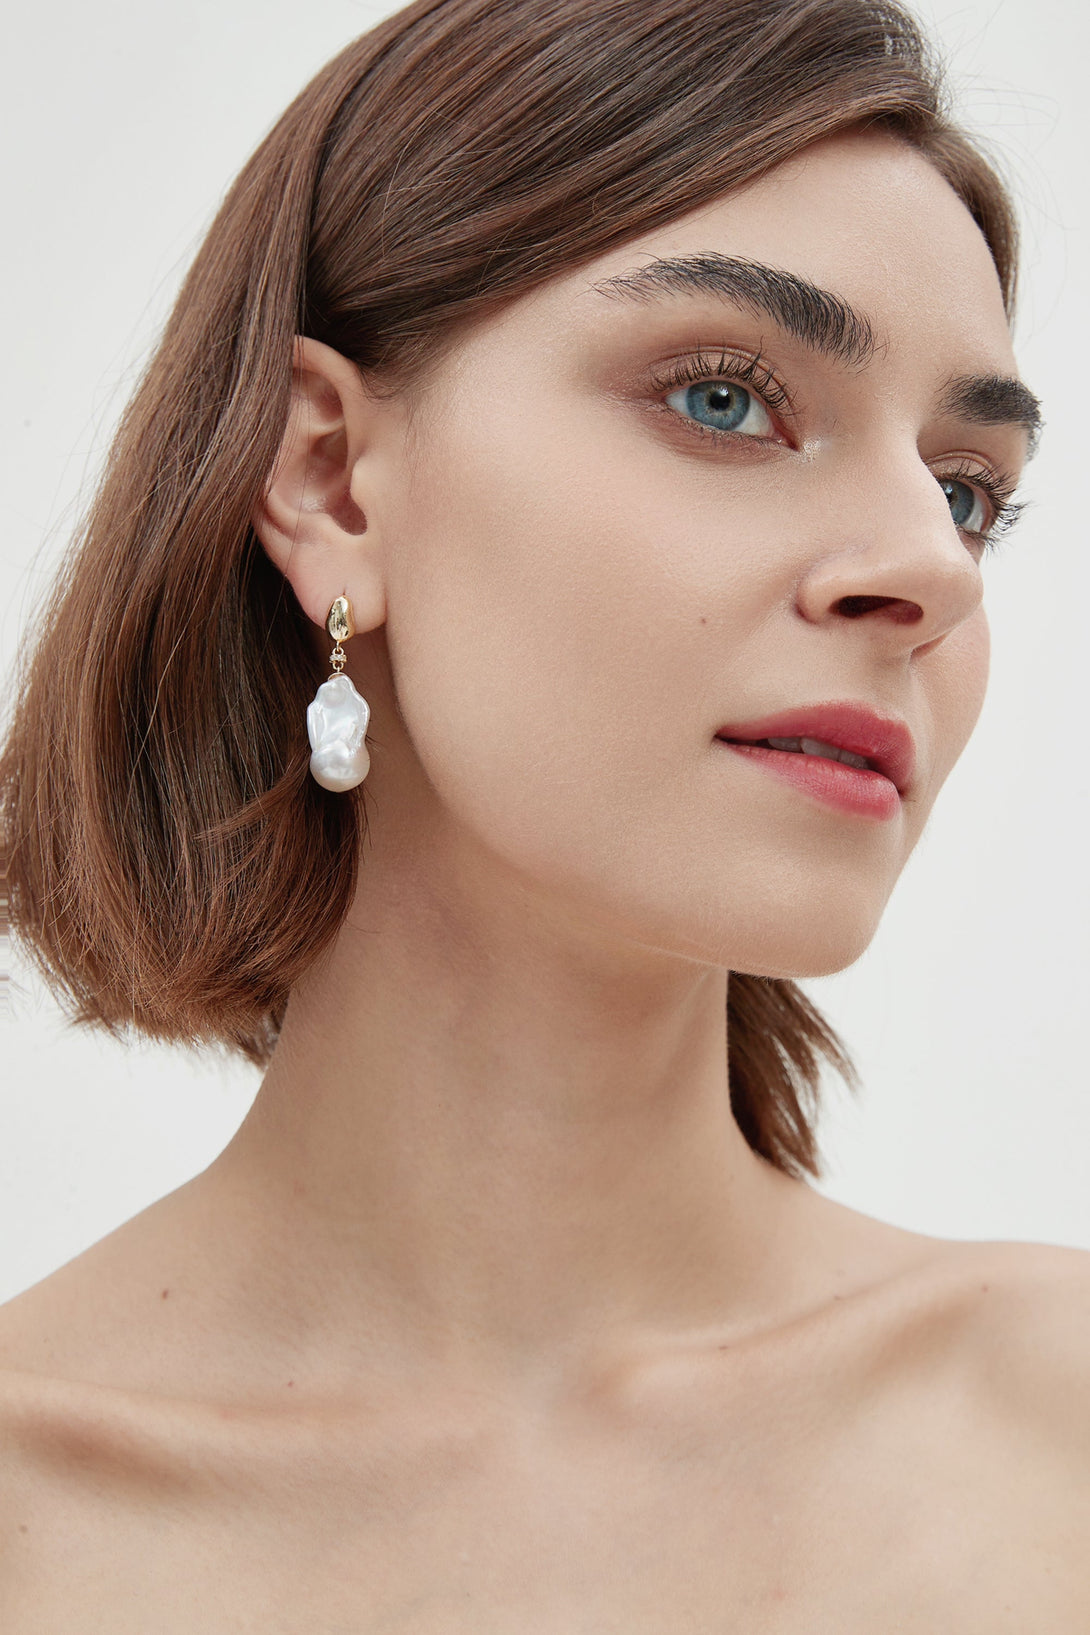 Doris Gold Vermeil Natural Baroque Pearl Drop Earrings - Classicharms